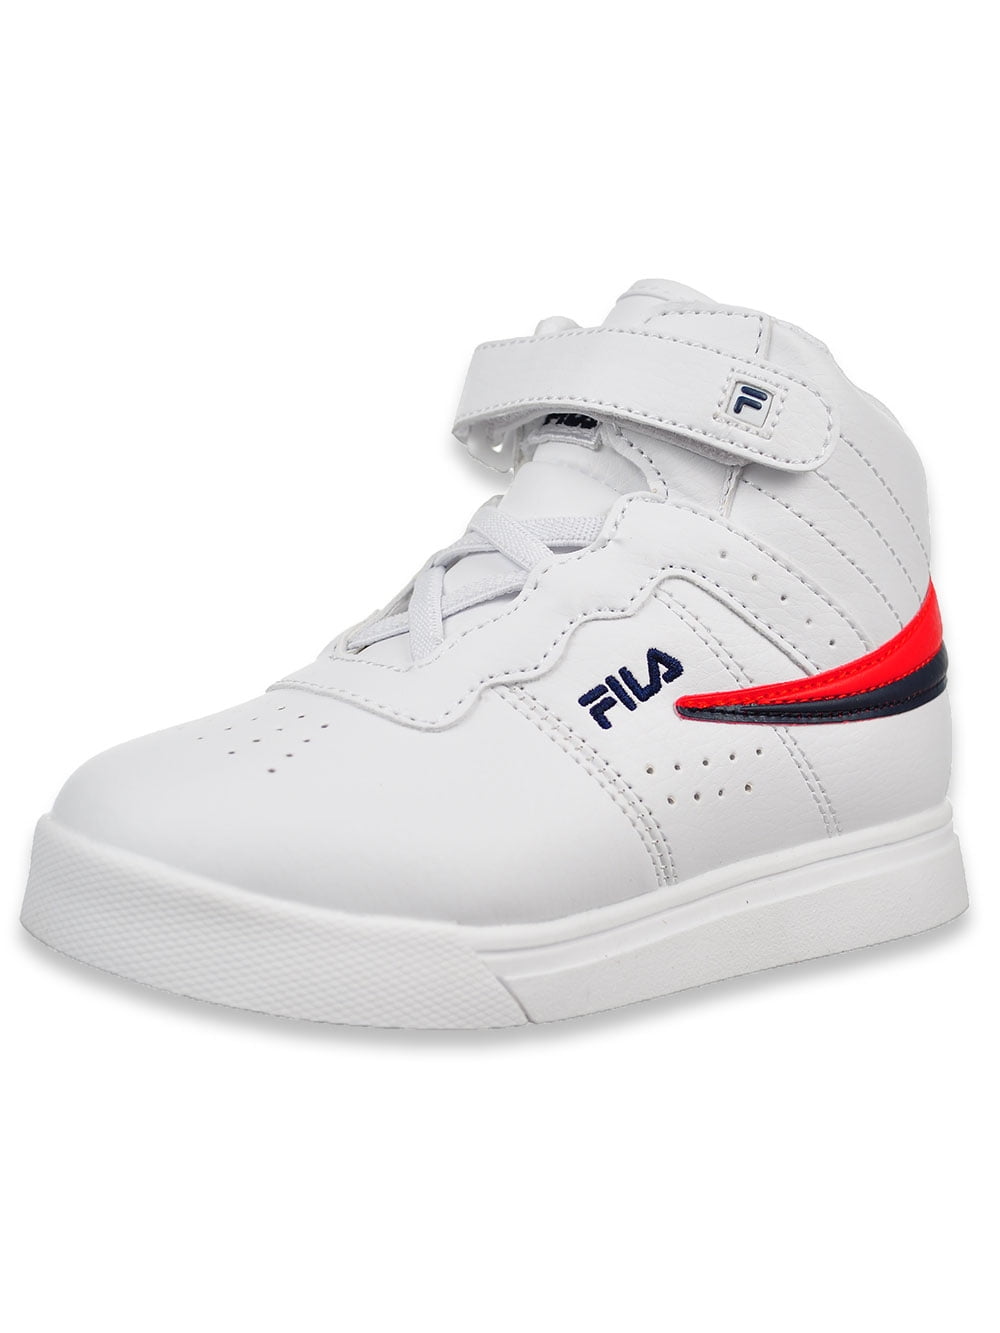 Fila Boys\' Vulc 13 Mid Plus Hi-Top Sneakers (Sizes 6 - 10) -  white/navy/red, 10 toddler | Sneaker high